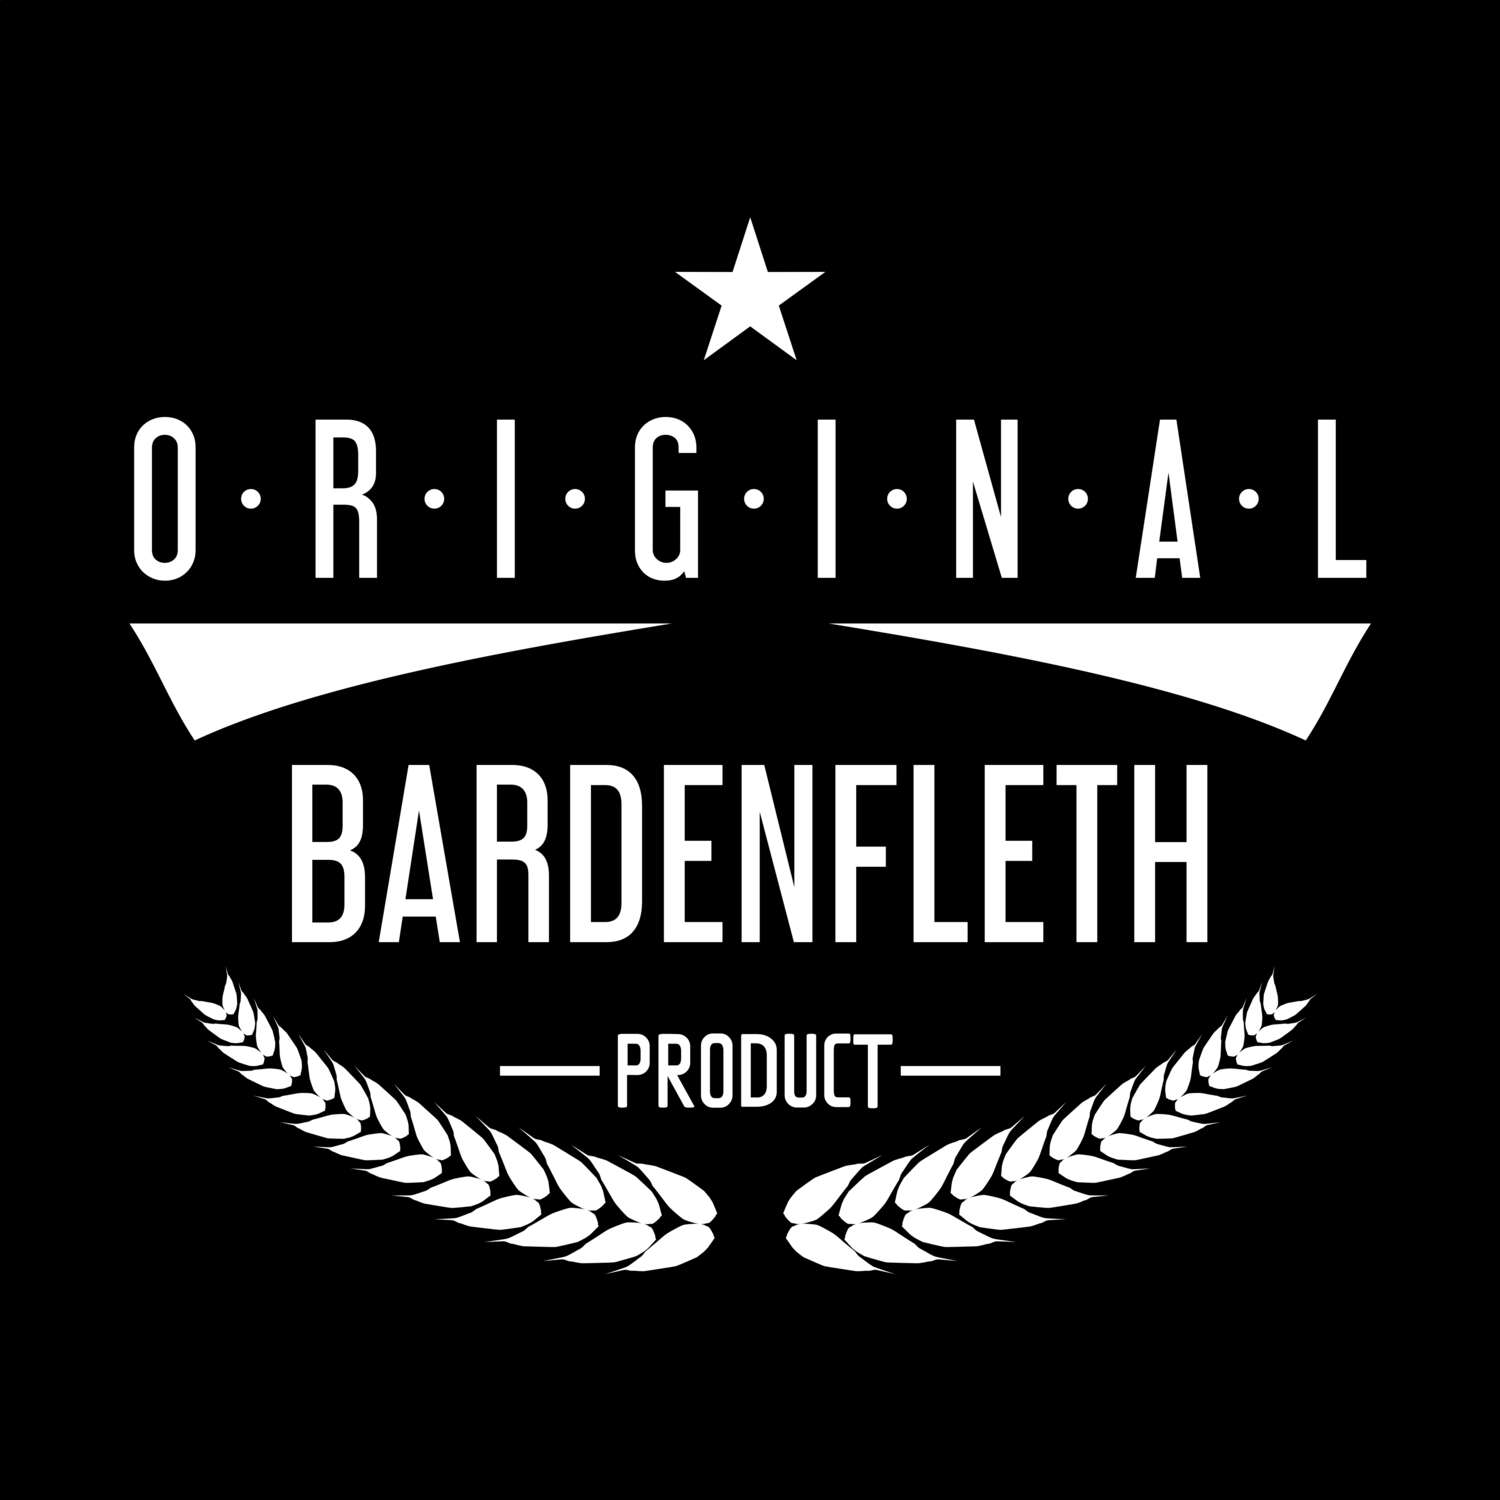 Bardenfleth T-Shirt »Original Product«